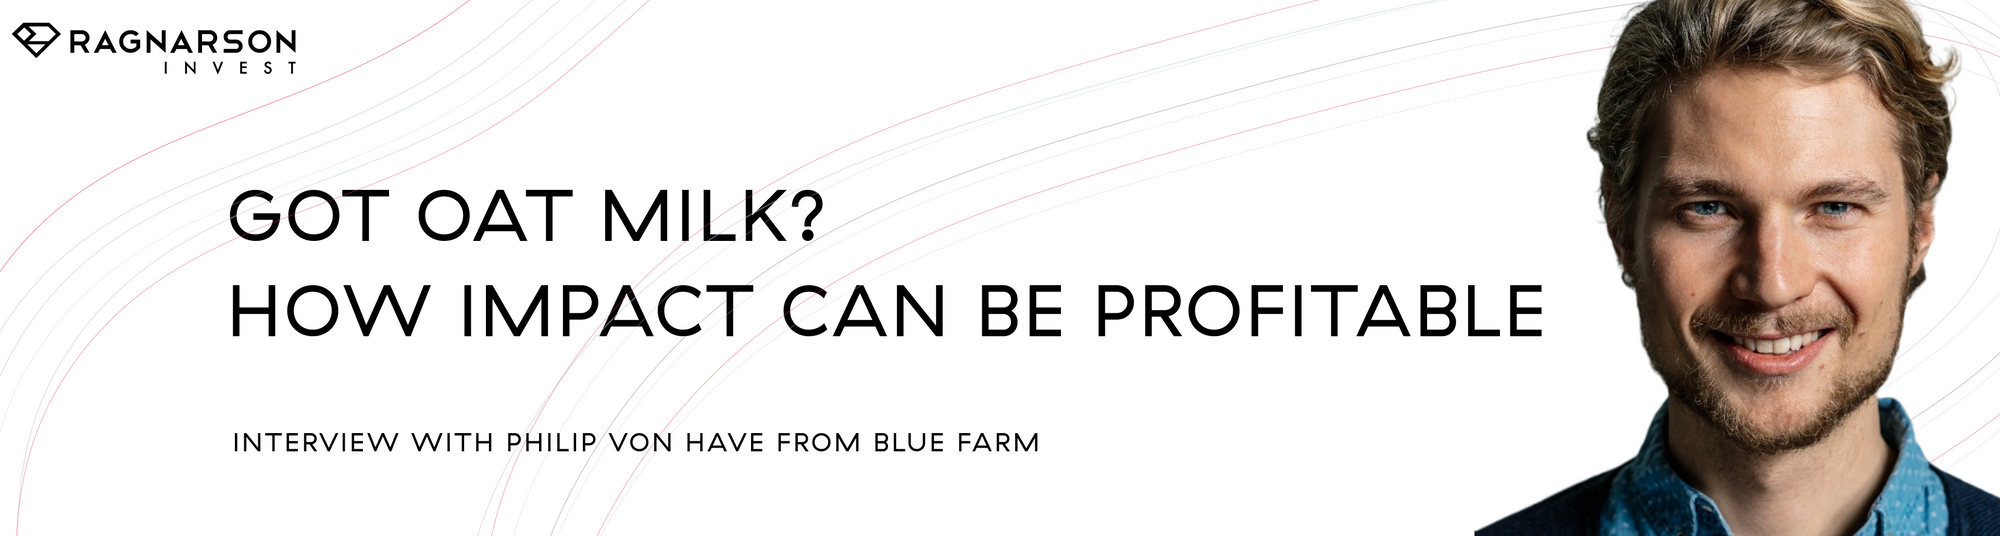 Berlin-Based Blue Farm Is Making Oat Milk Even More Sustainable